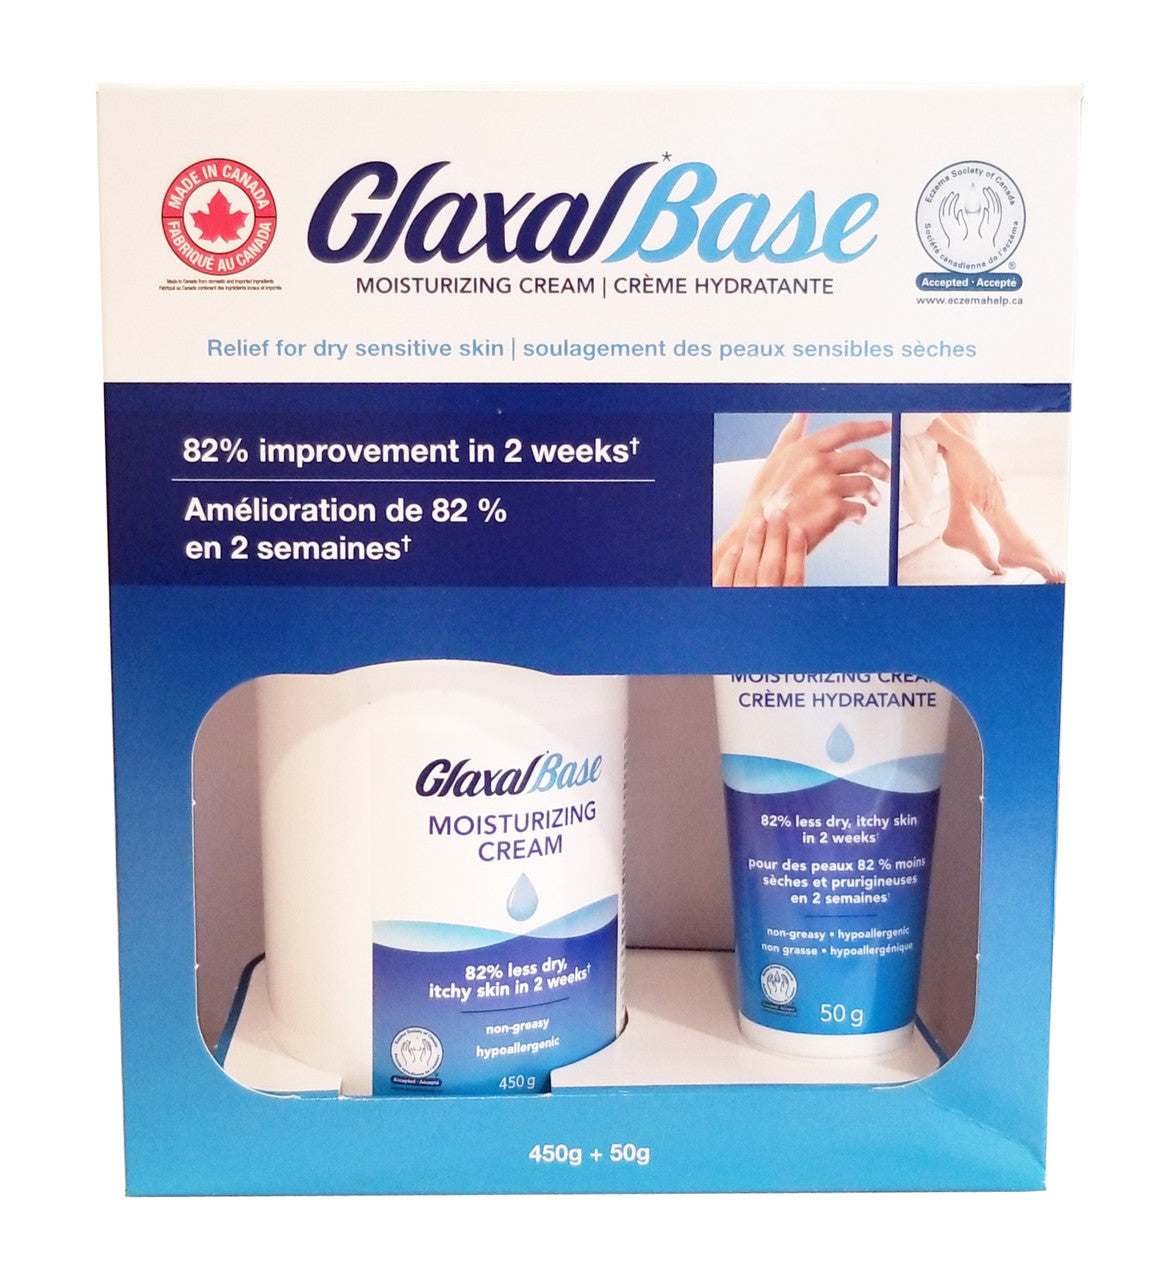 Glaxal Base Moisturizing Cream, 450g/15.75 oz. and 50g/1.75 oz. Bottles {Imported from Canada}